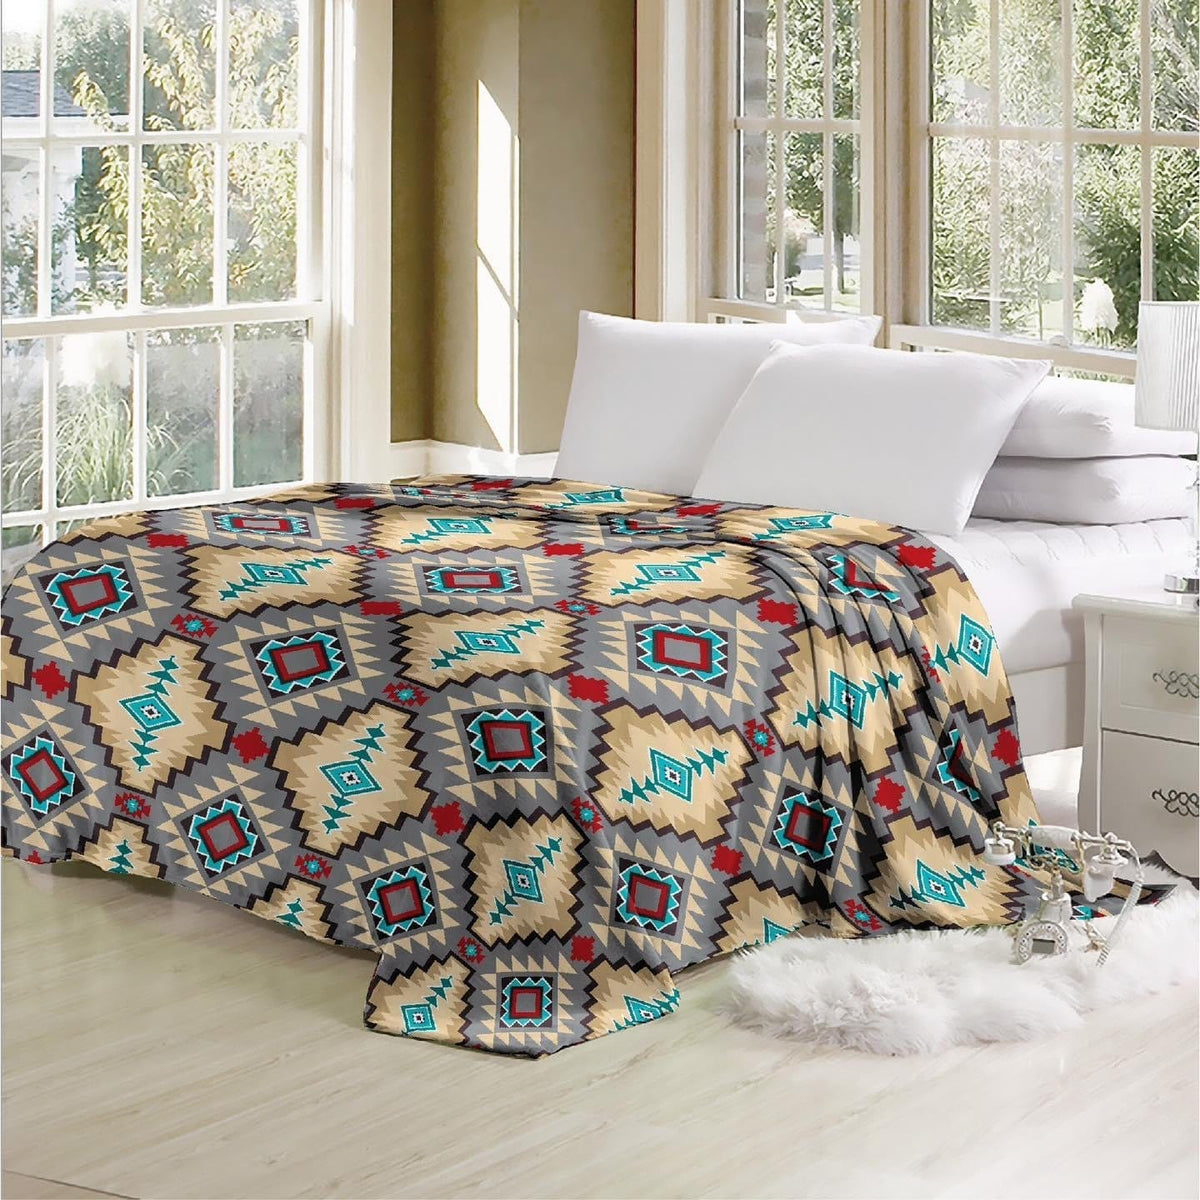 Queen Southwest velvet LUXURY flannel BLANKET Southwest Bedazzle blankets/slippers